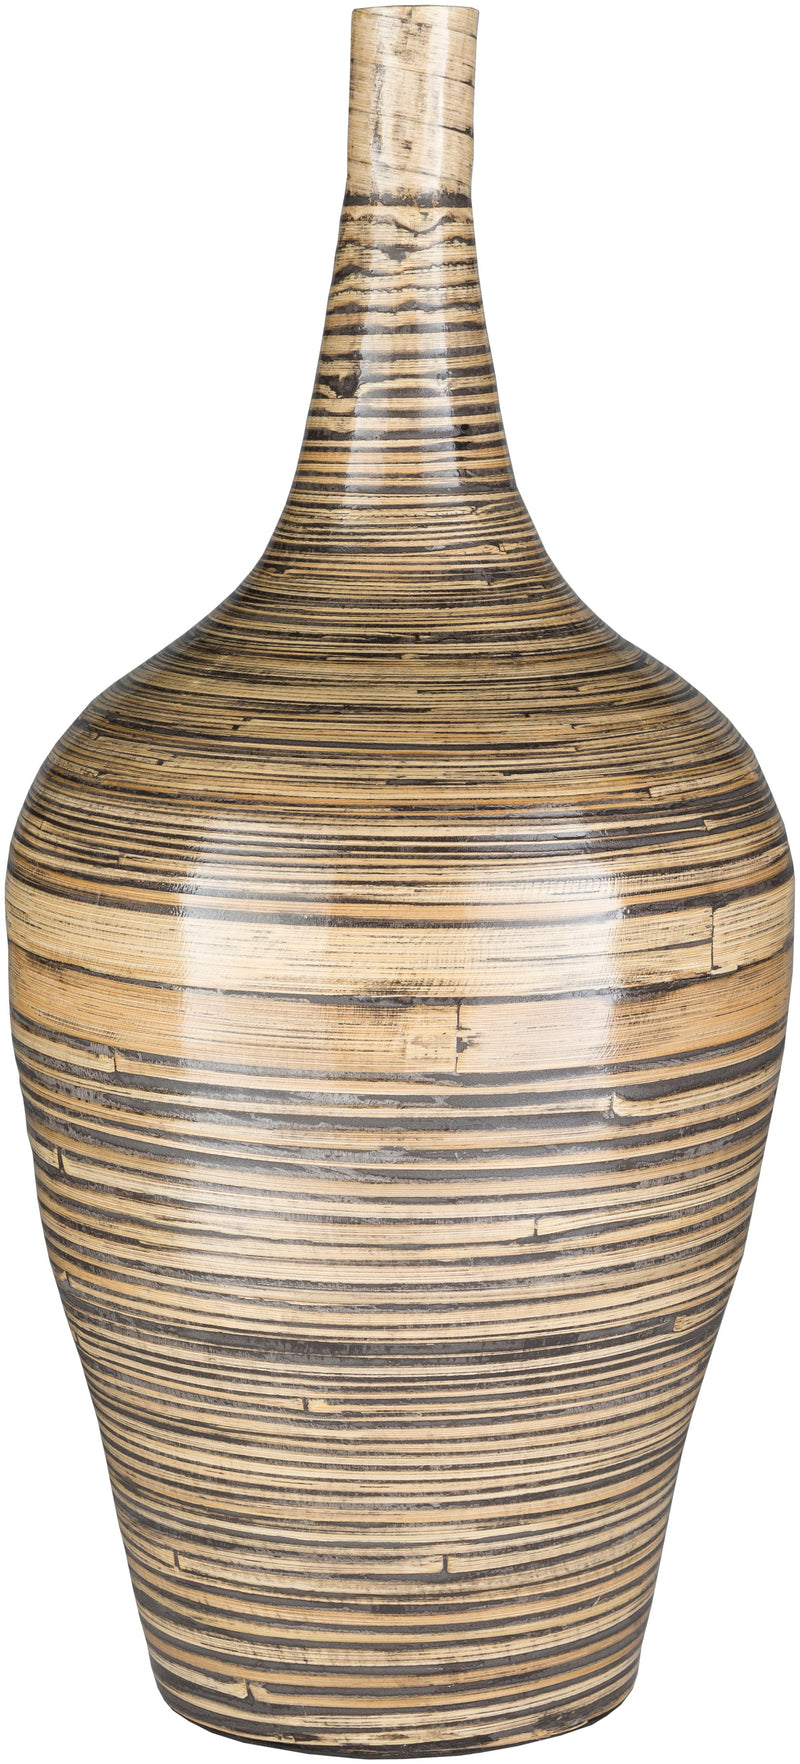 Bamboo Floor Vase